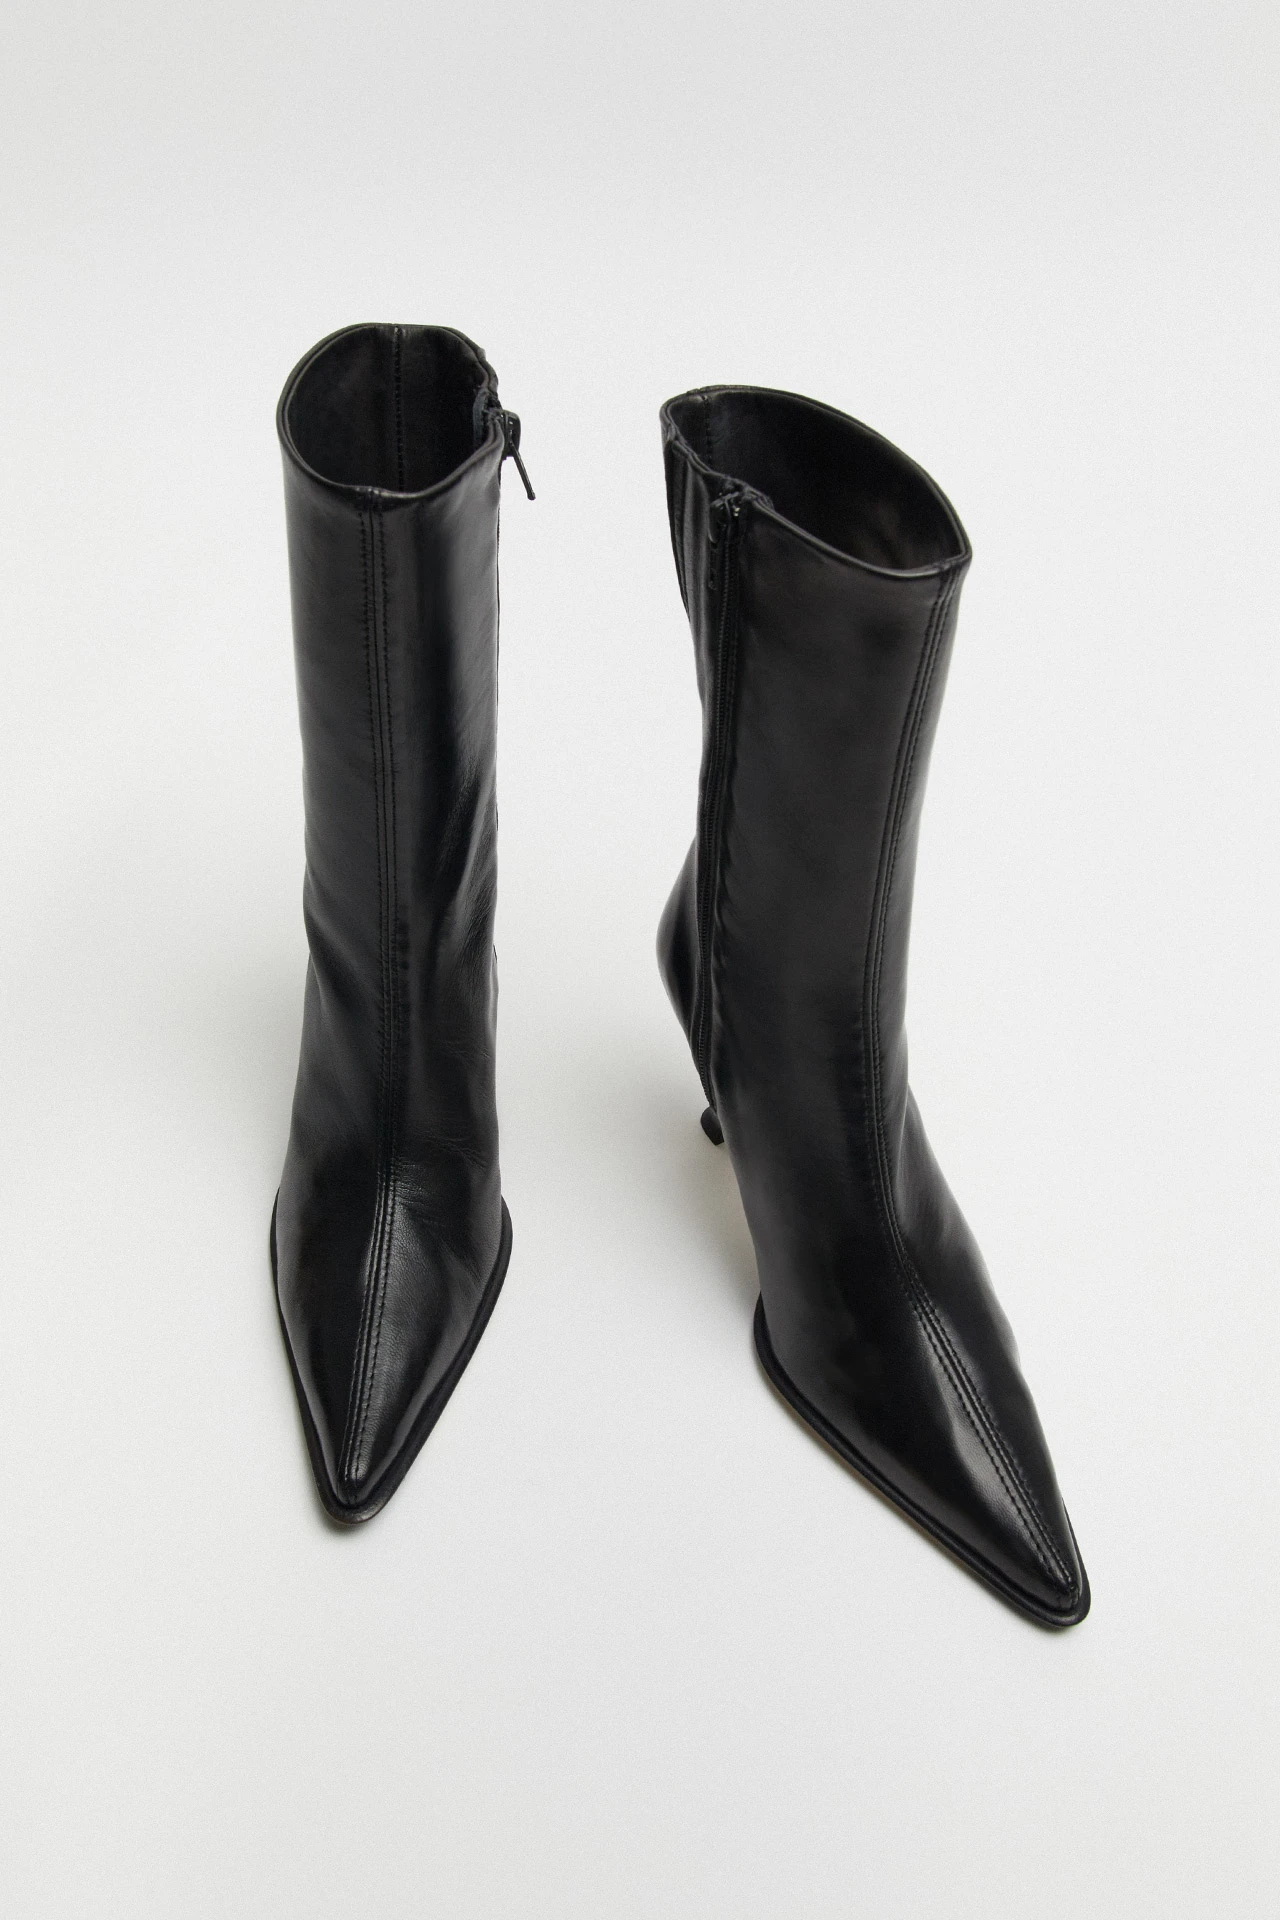 Miista-marcela-black-boots-04